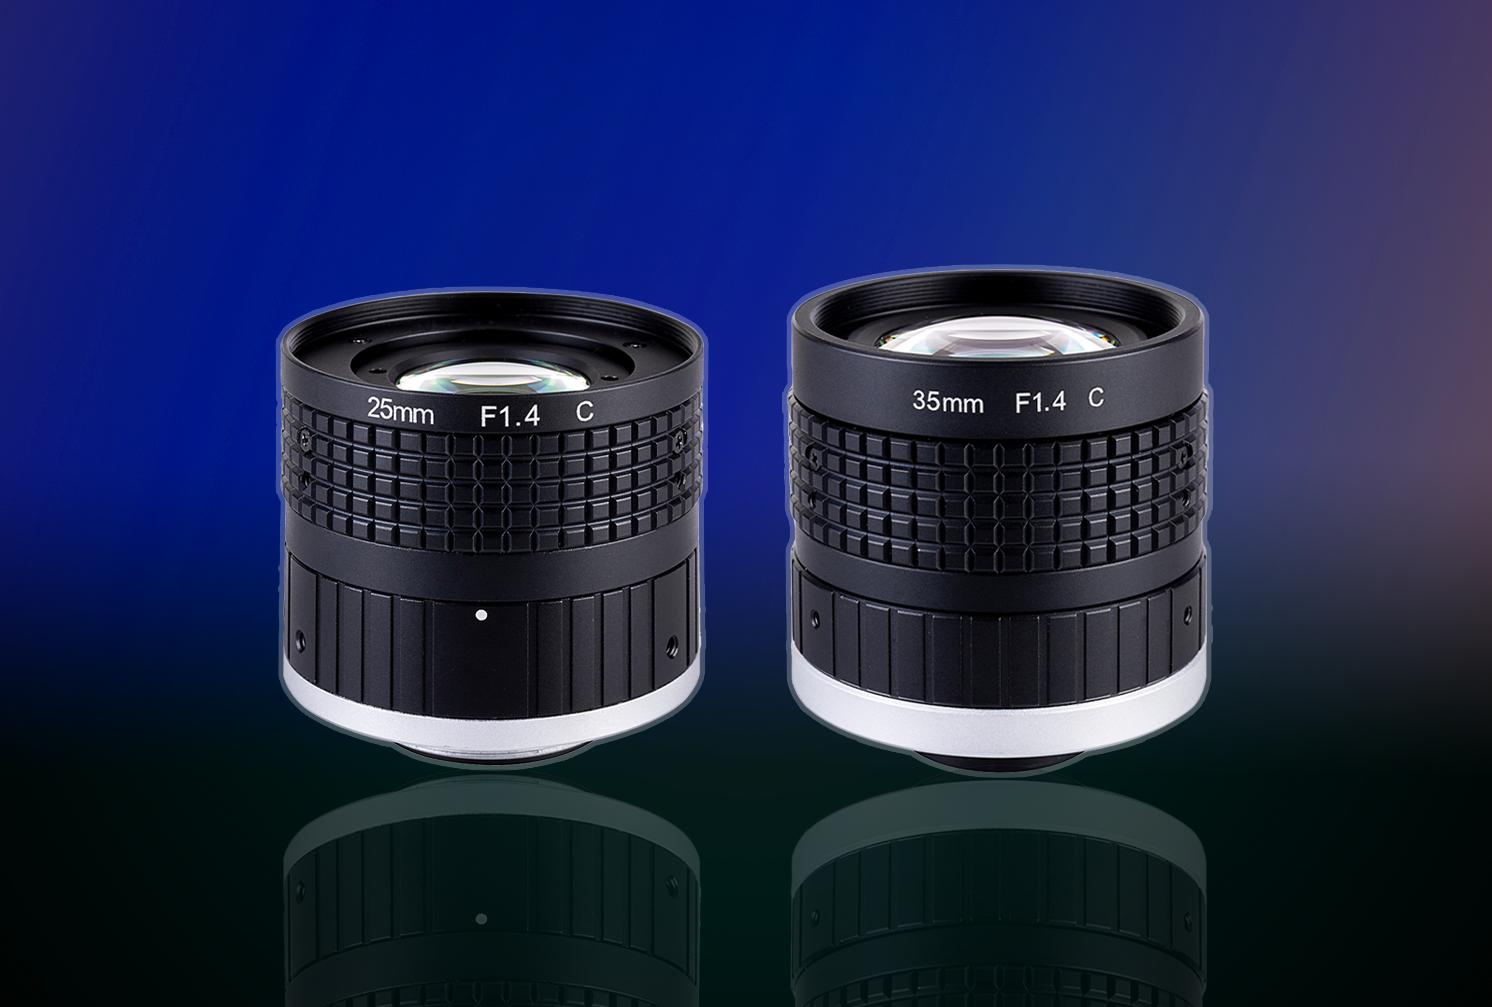 LWIR lenses (Longwave Infrared Lenses) Featured Image